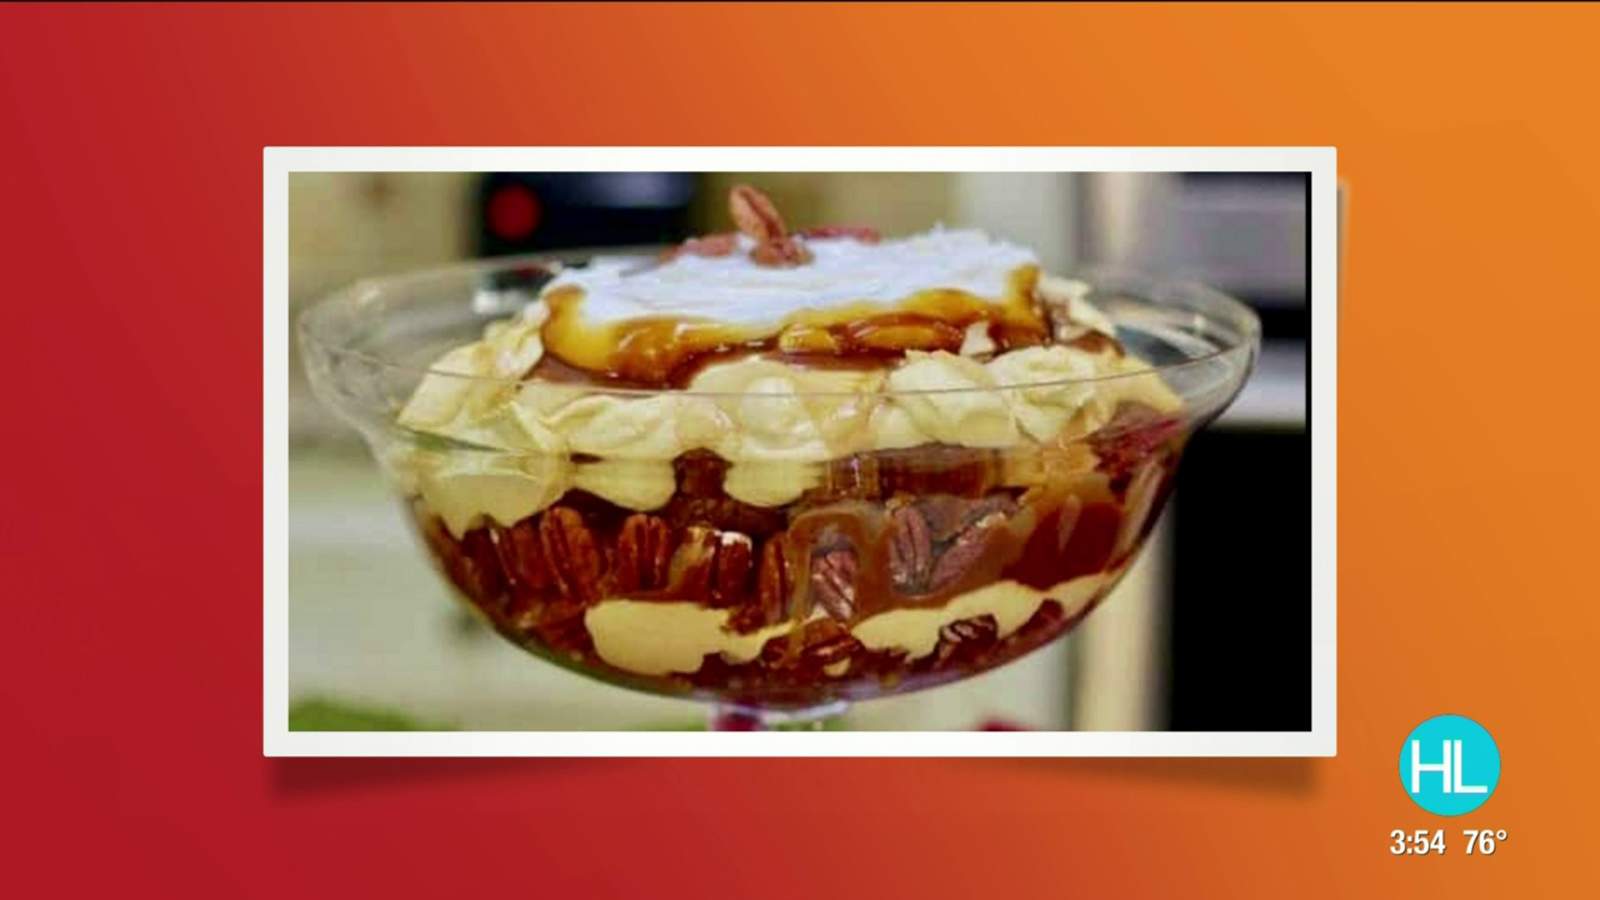 Tanji Patton of Goodtaste TV shares her Pumpkin-Dulce De Leche Trifle recipe